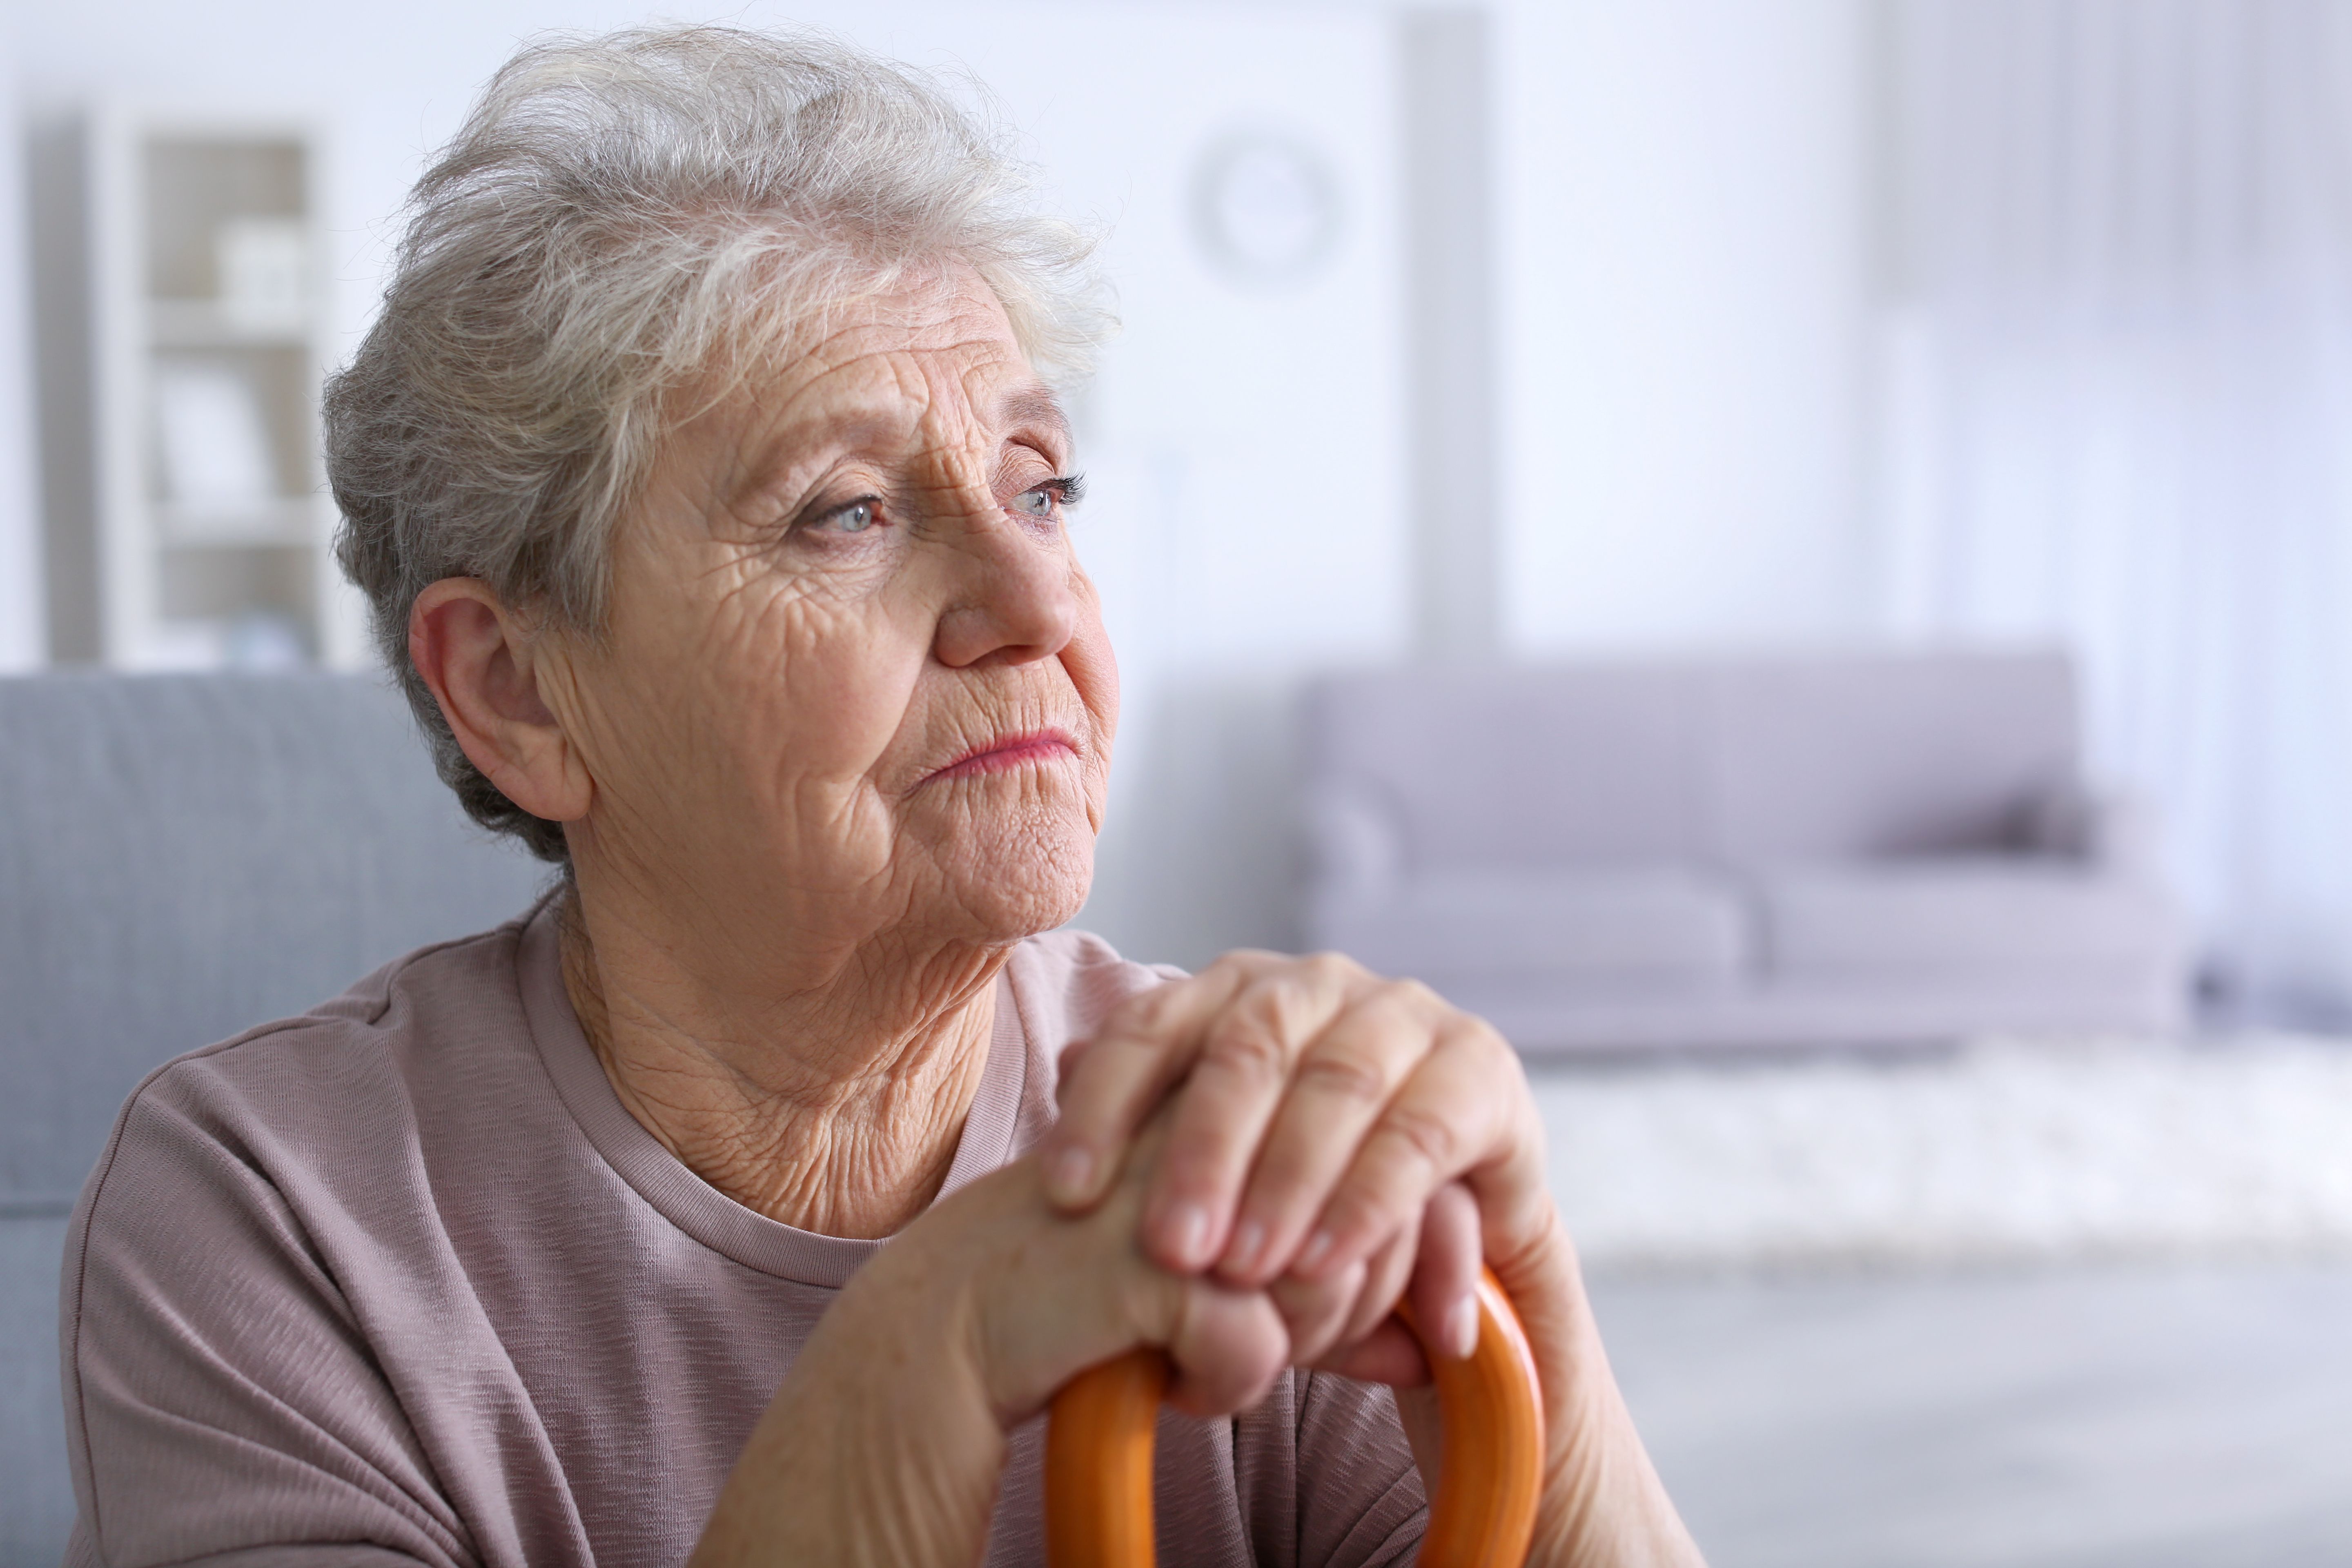 An elderly woman in deep thought. | Source: Shutterstock